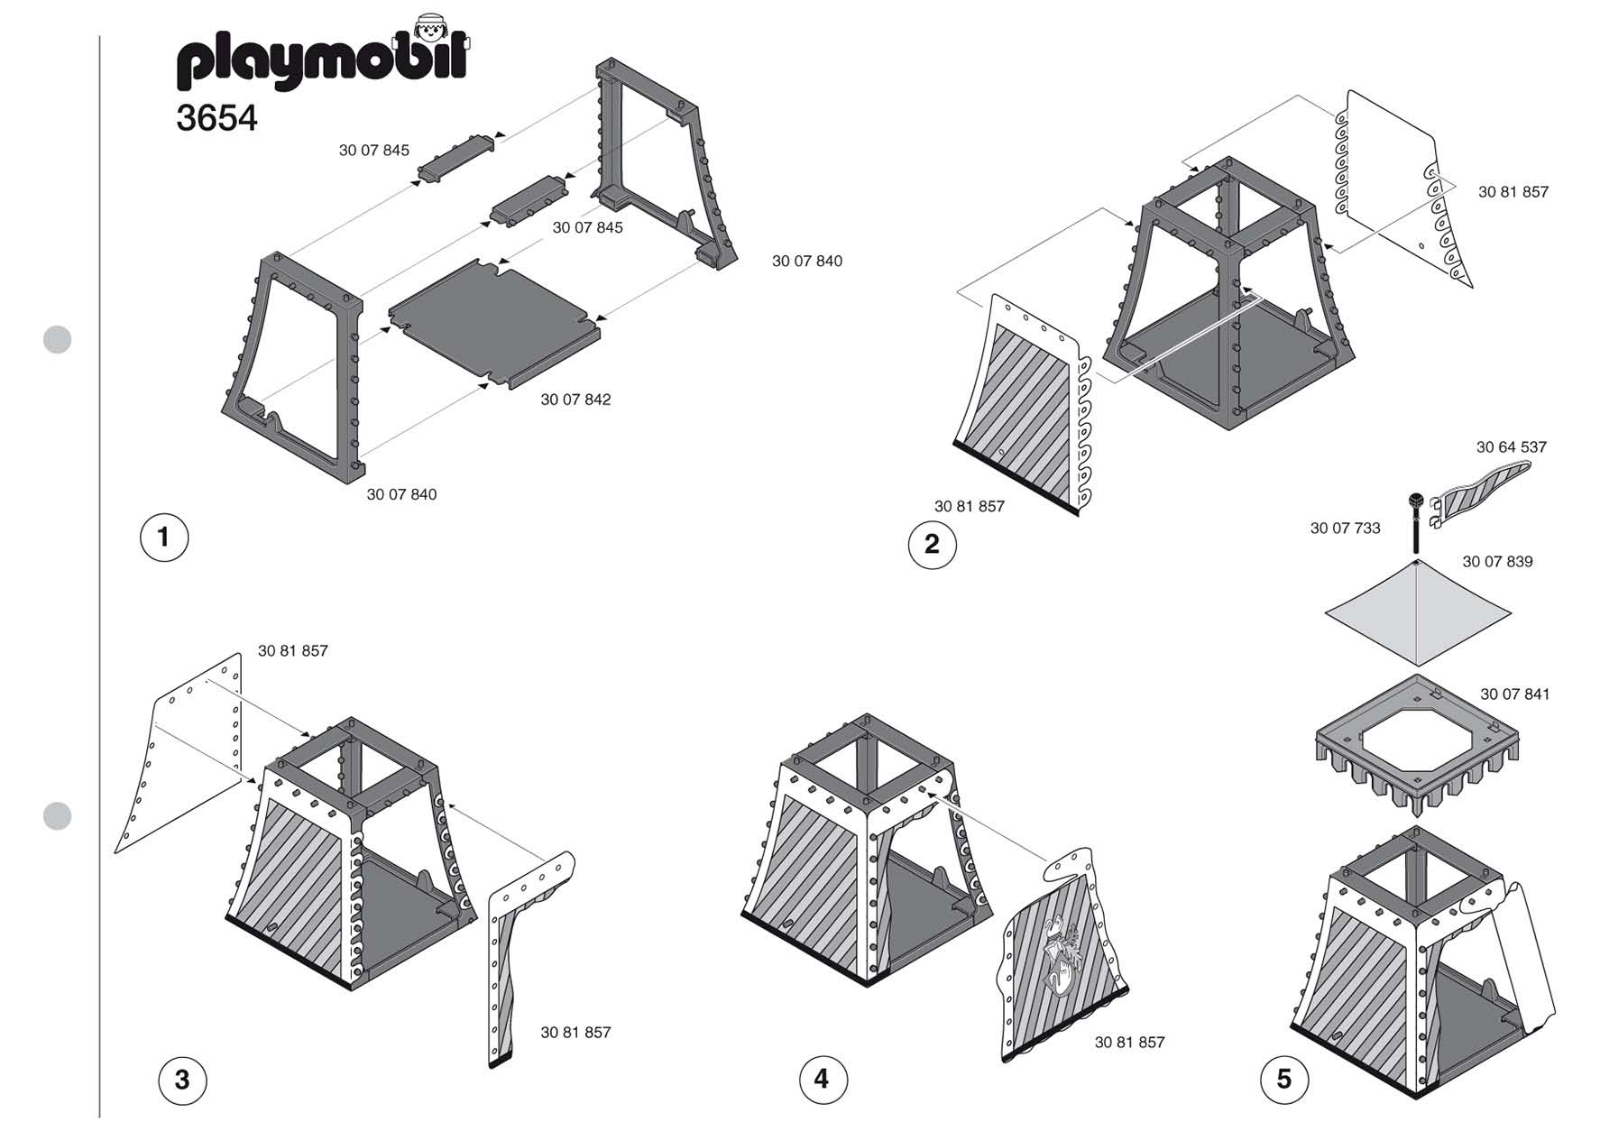 Playmobil 3654 Instructions